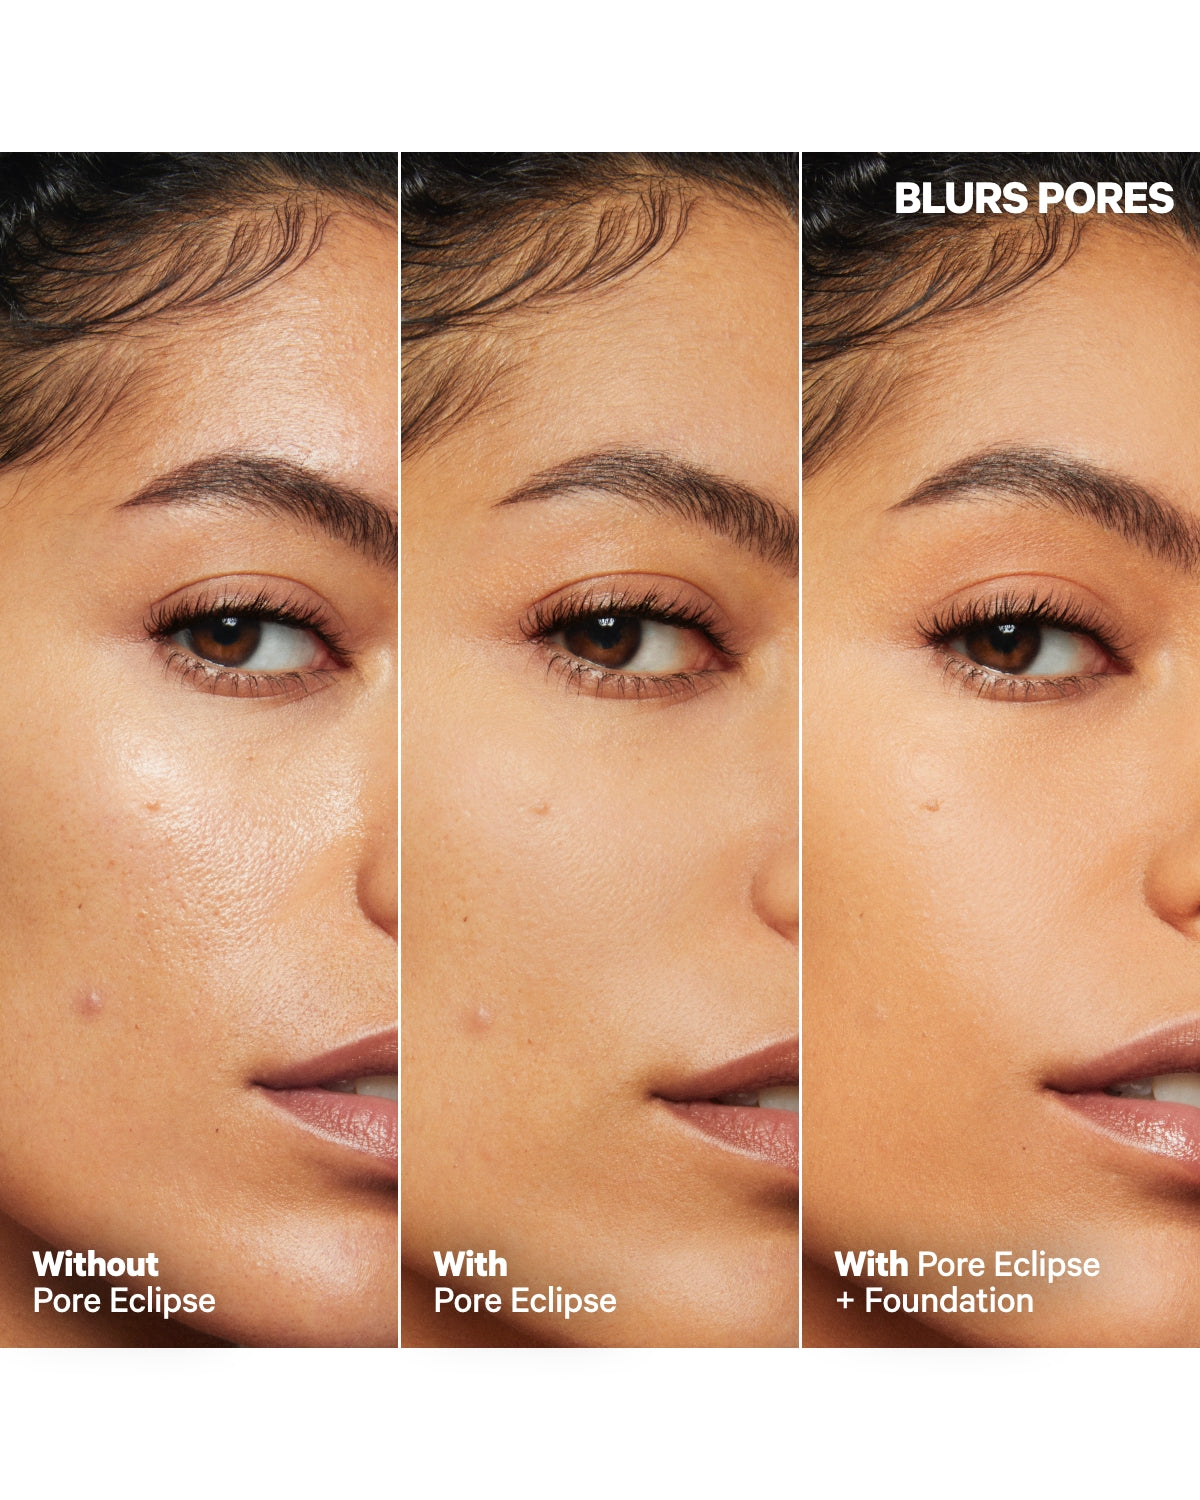 Pore Eclipse + Blurring Makeup | Makeup